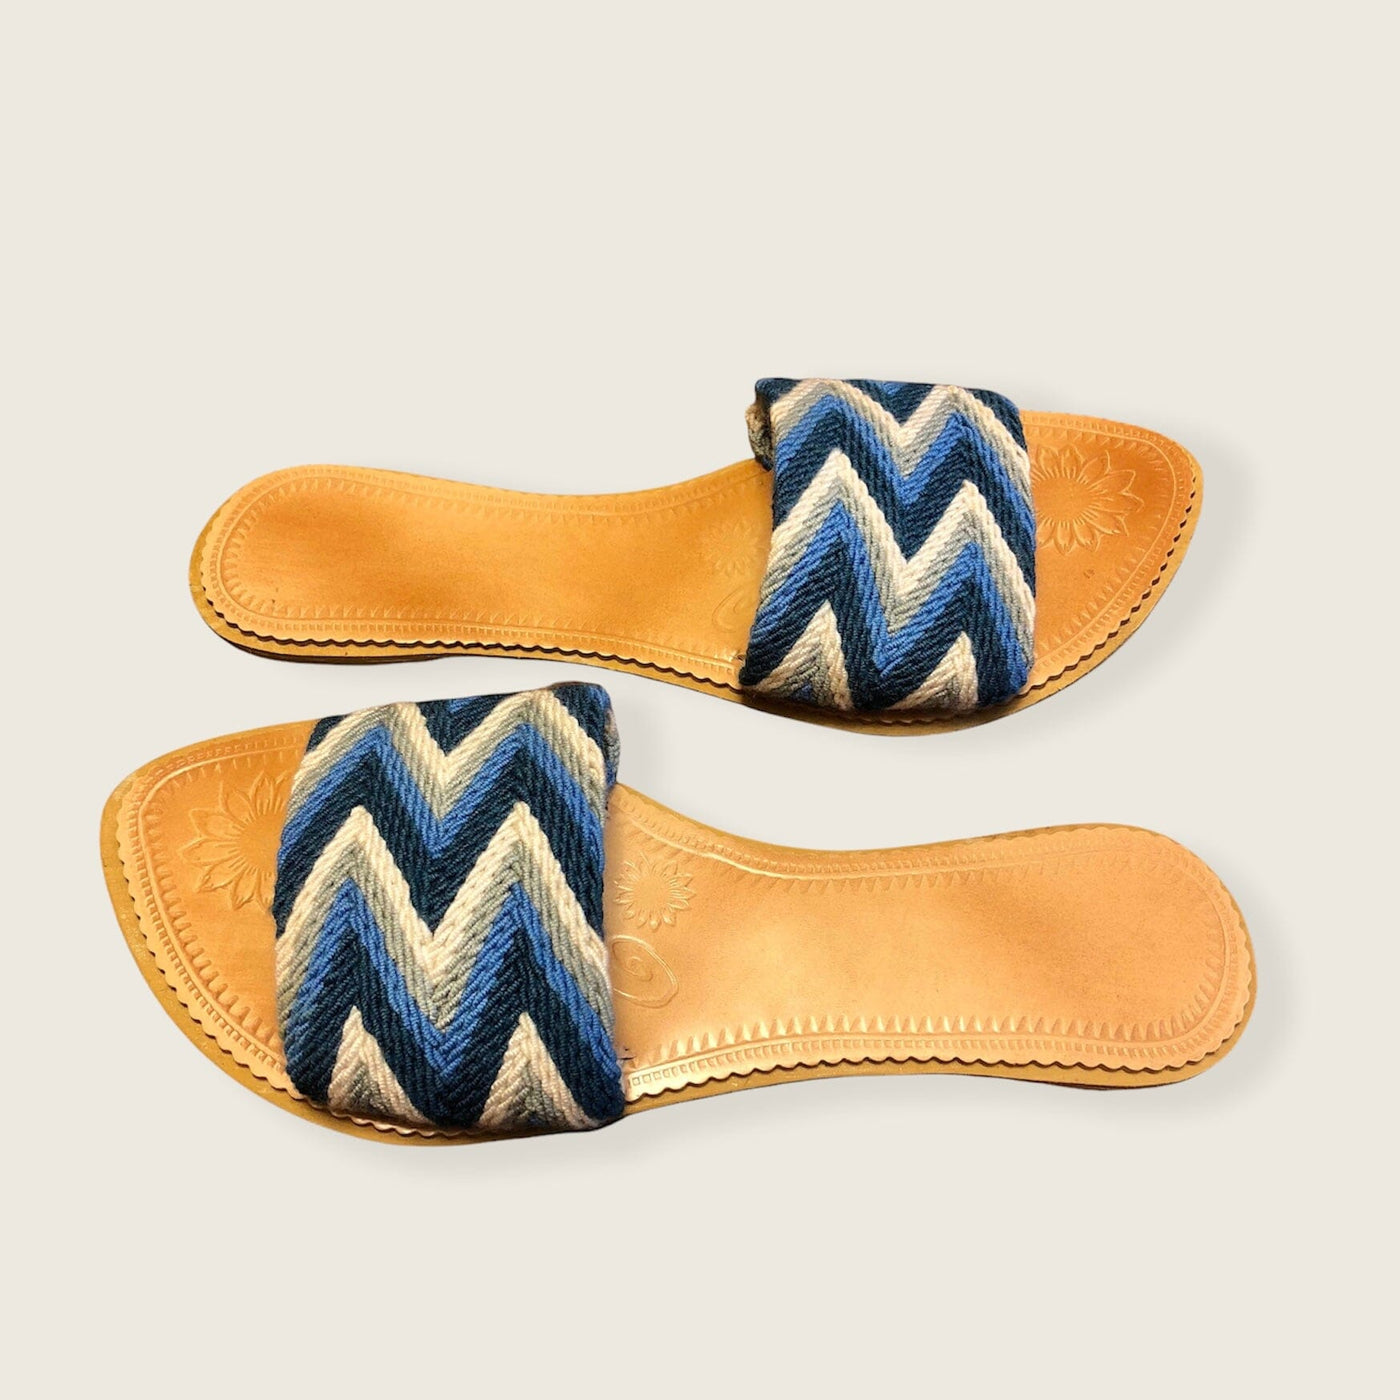 Azula Summer Sandals - Blue Slides Summer Sandals US 8/8.5 